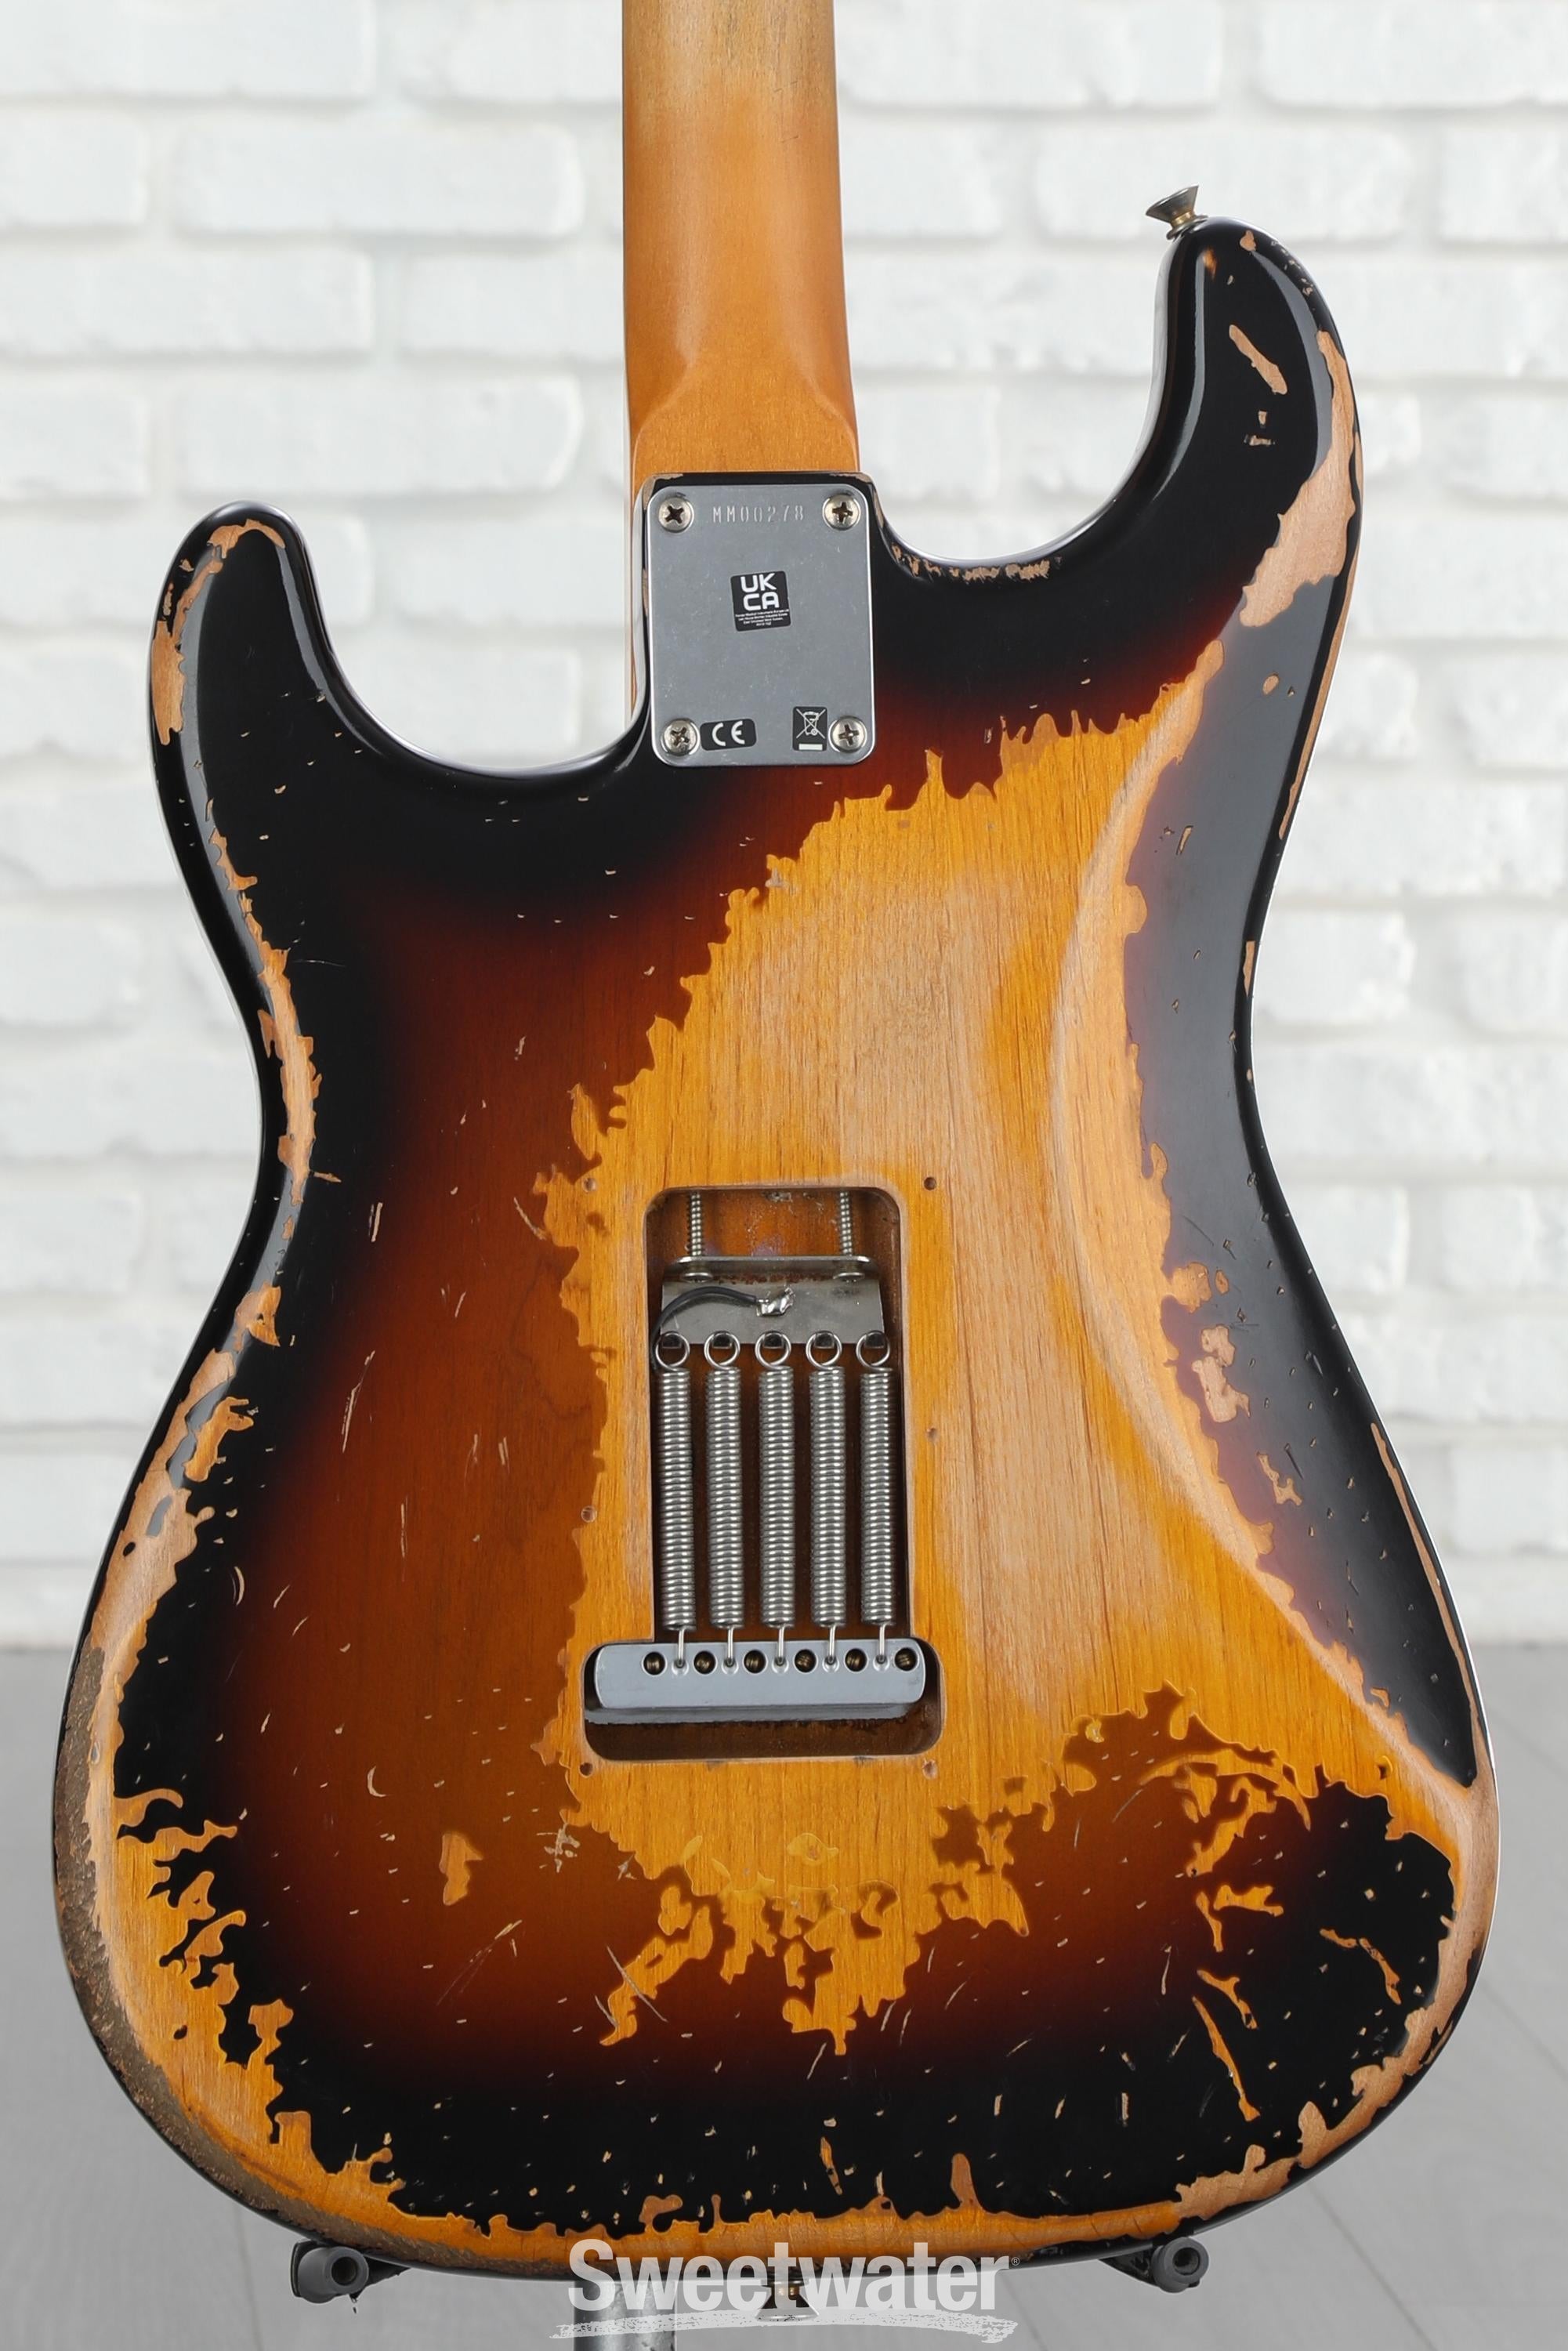 Mike McCready Stratocaster®